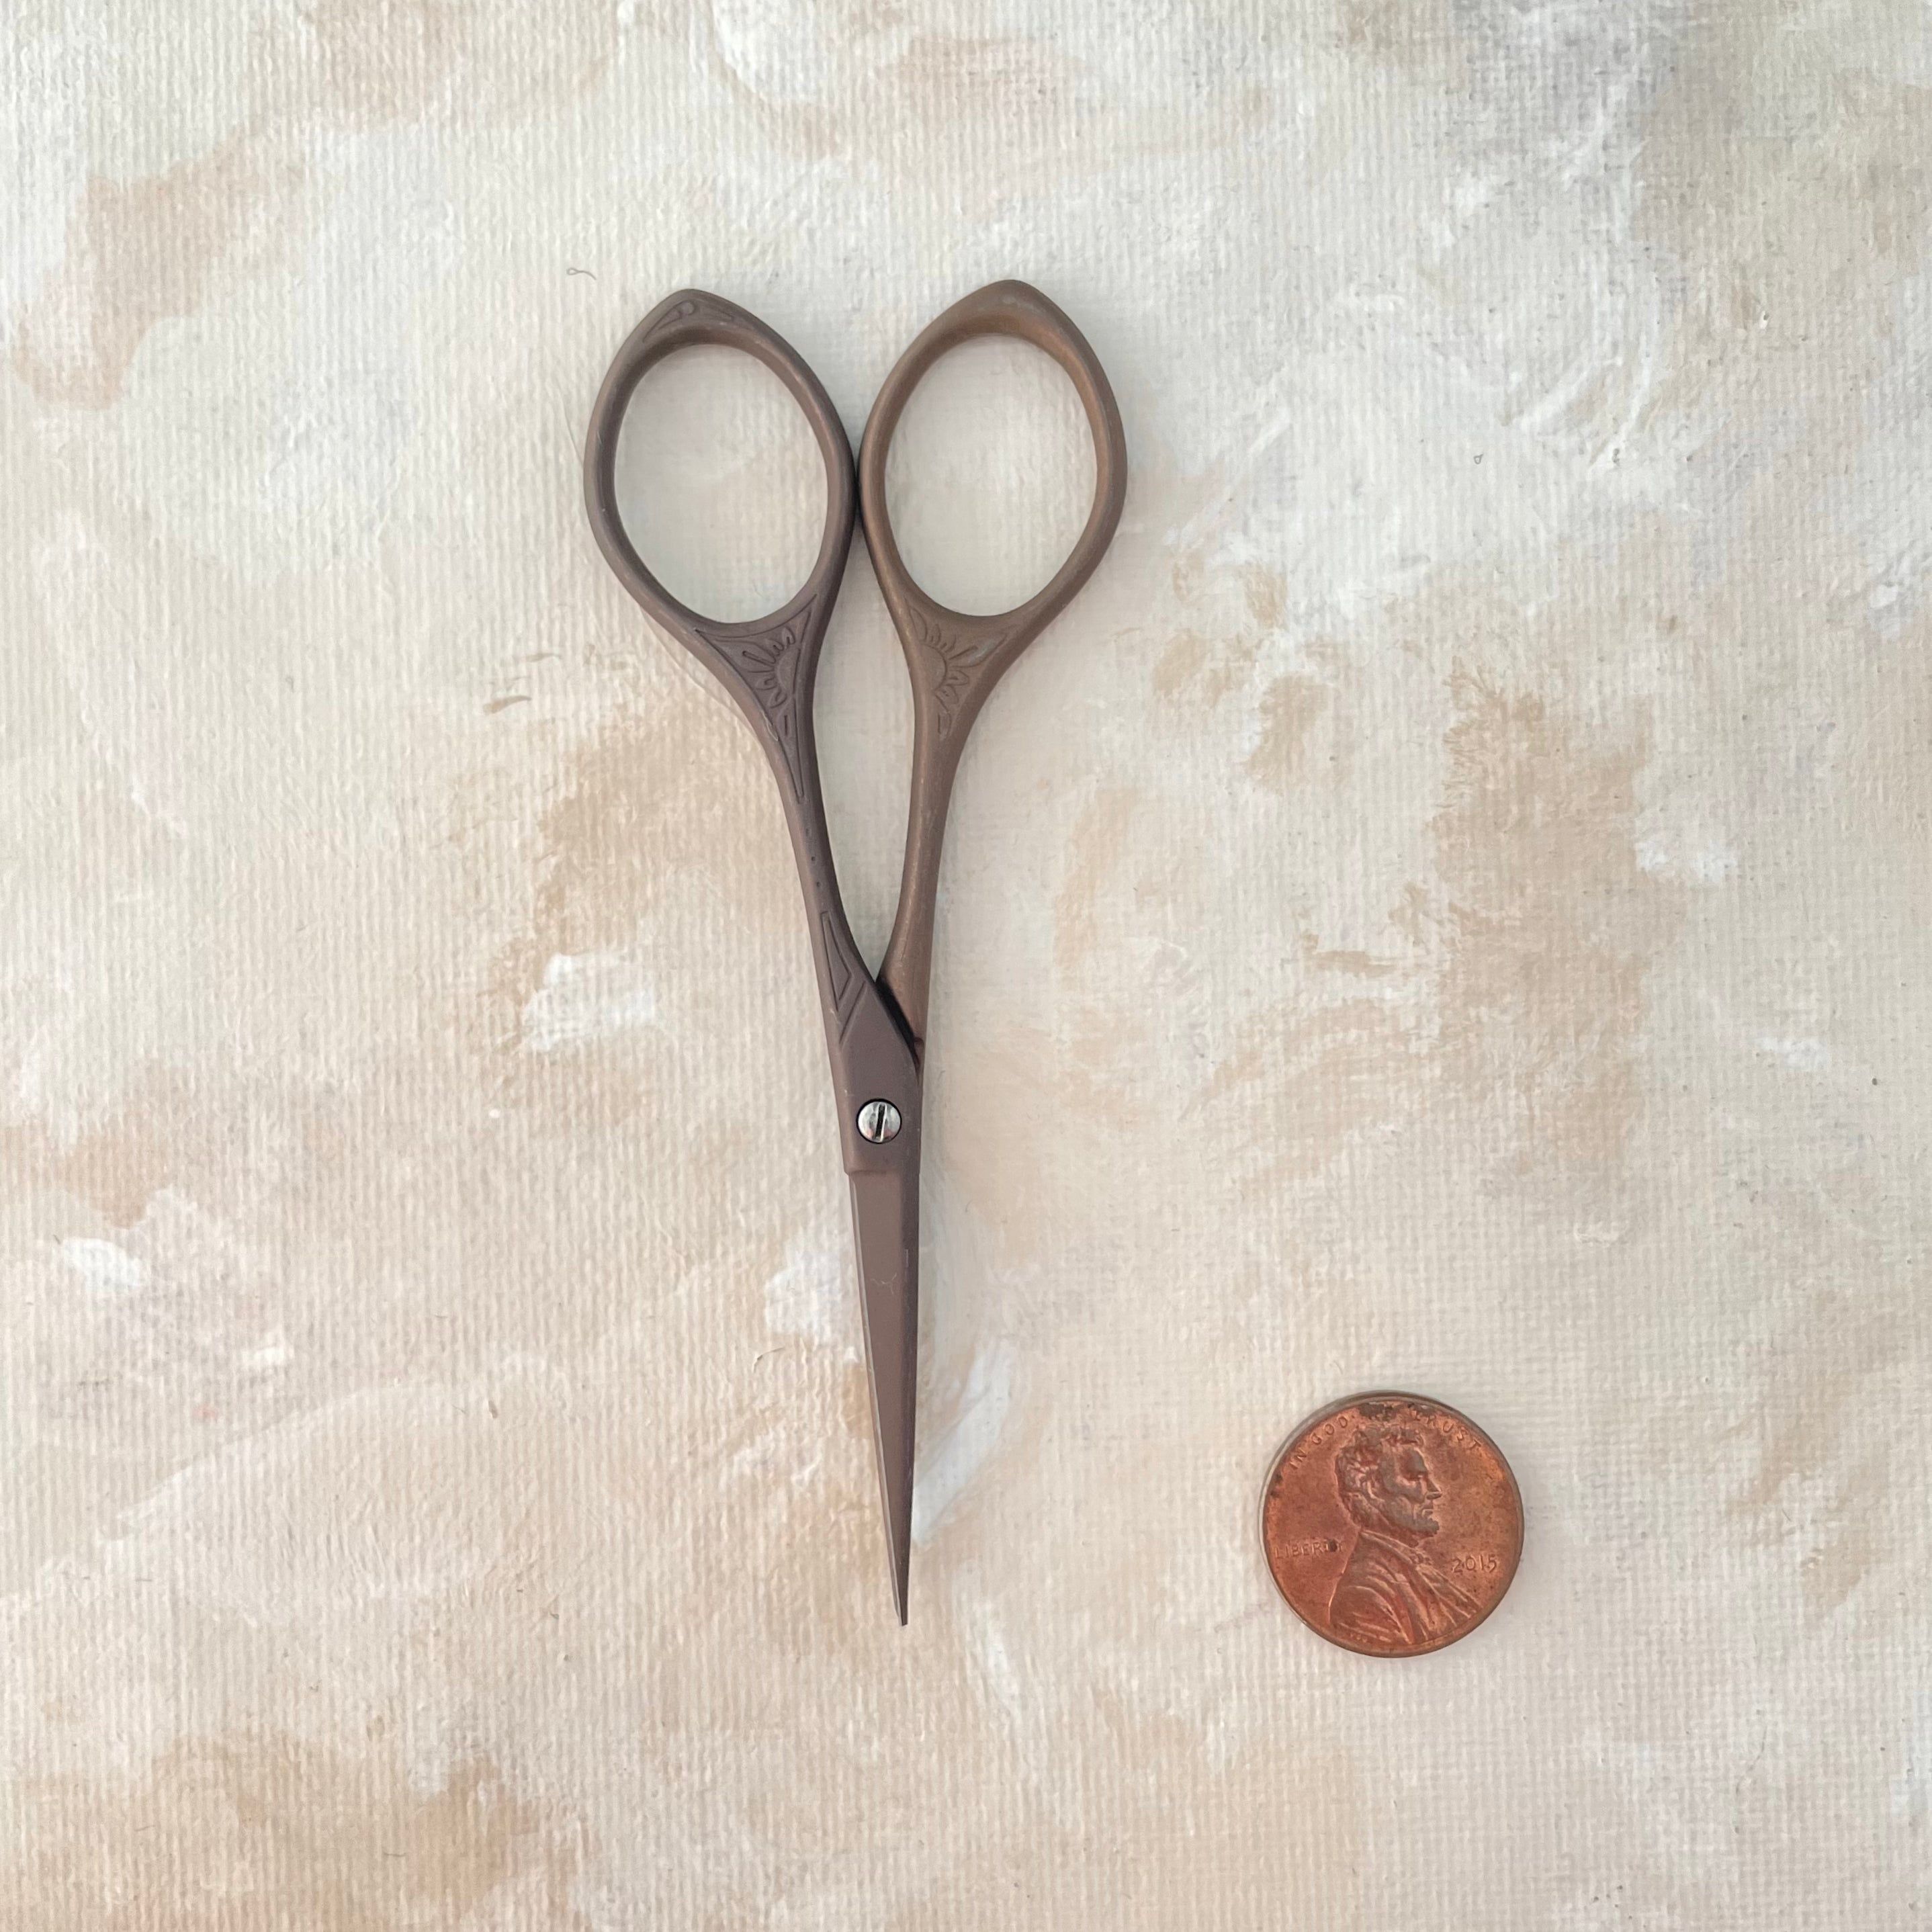 Flat Lay Props Styling Scissors